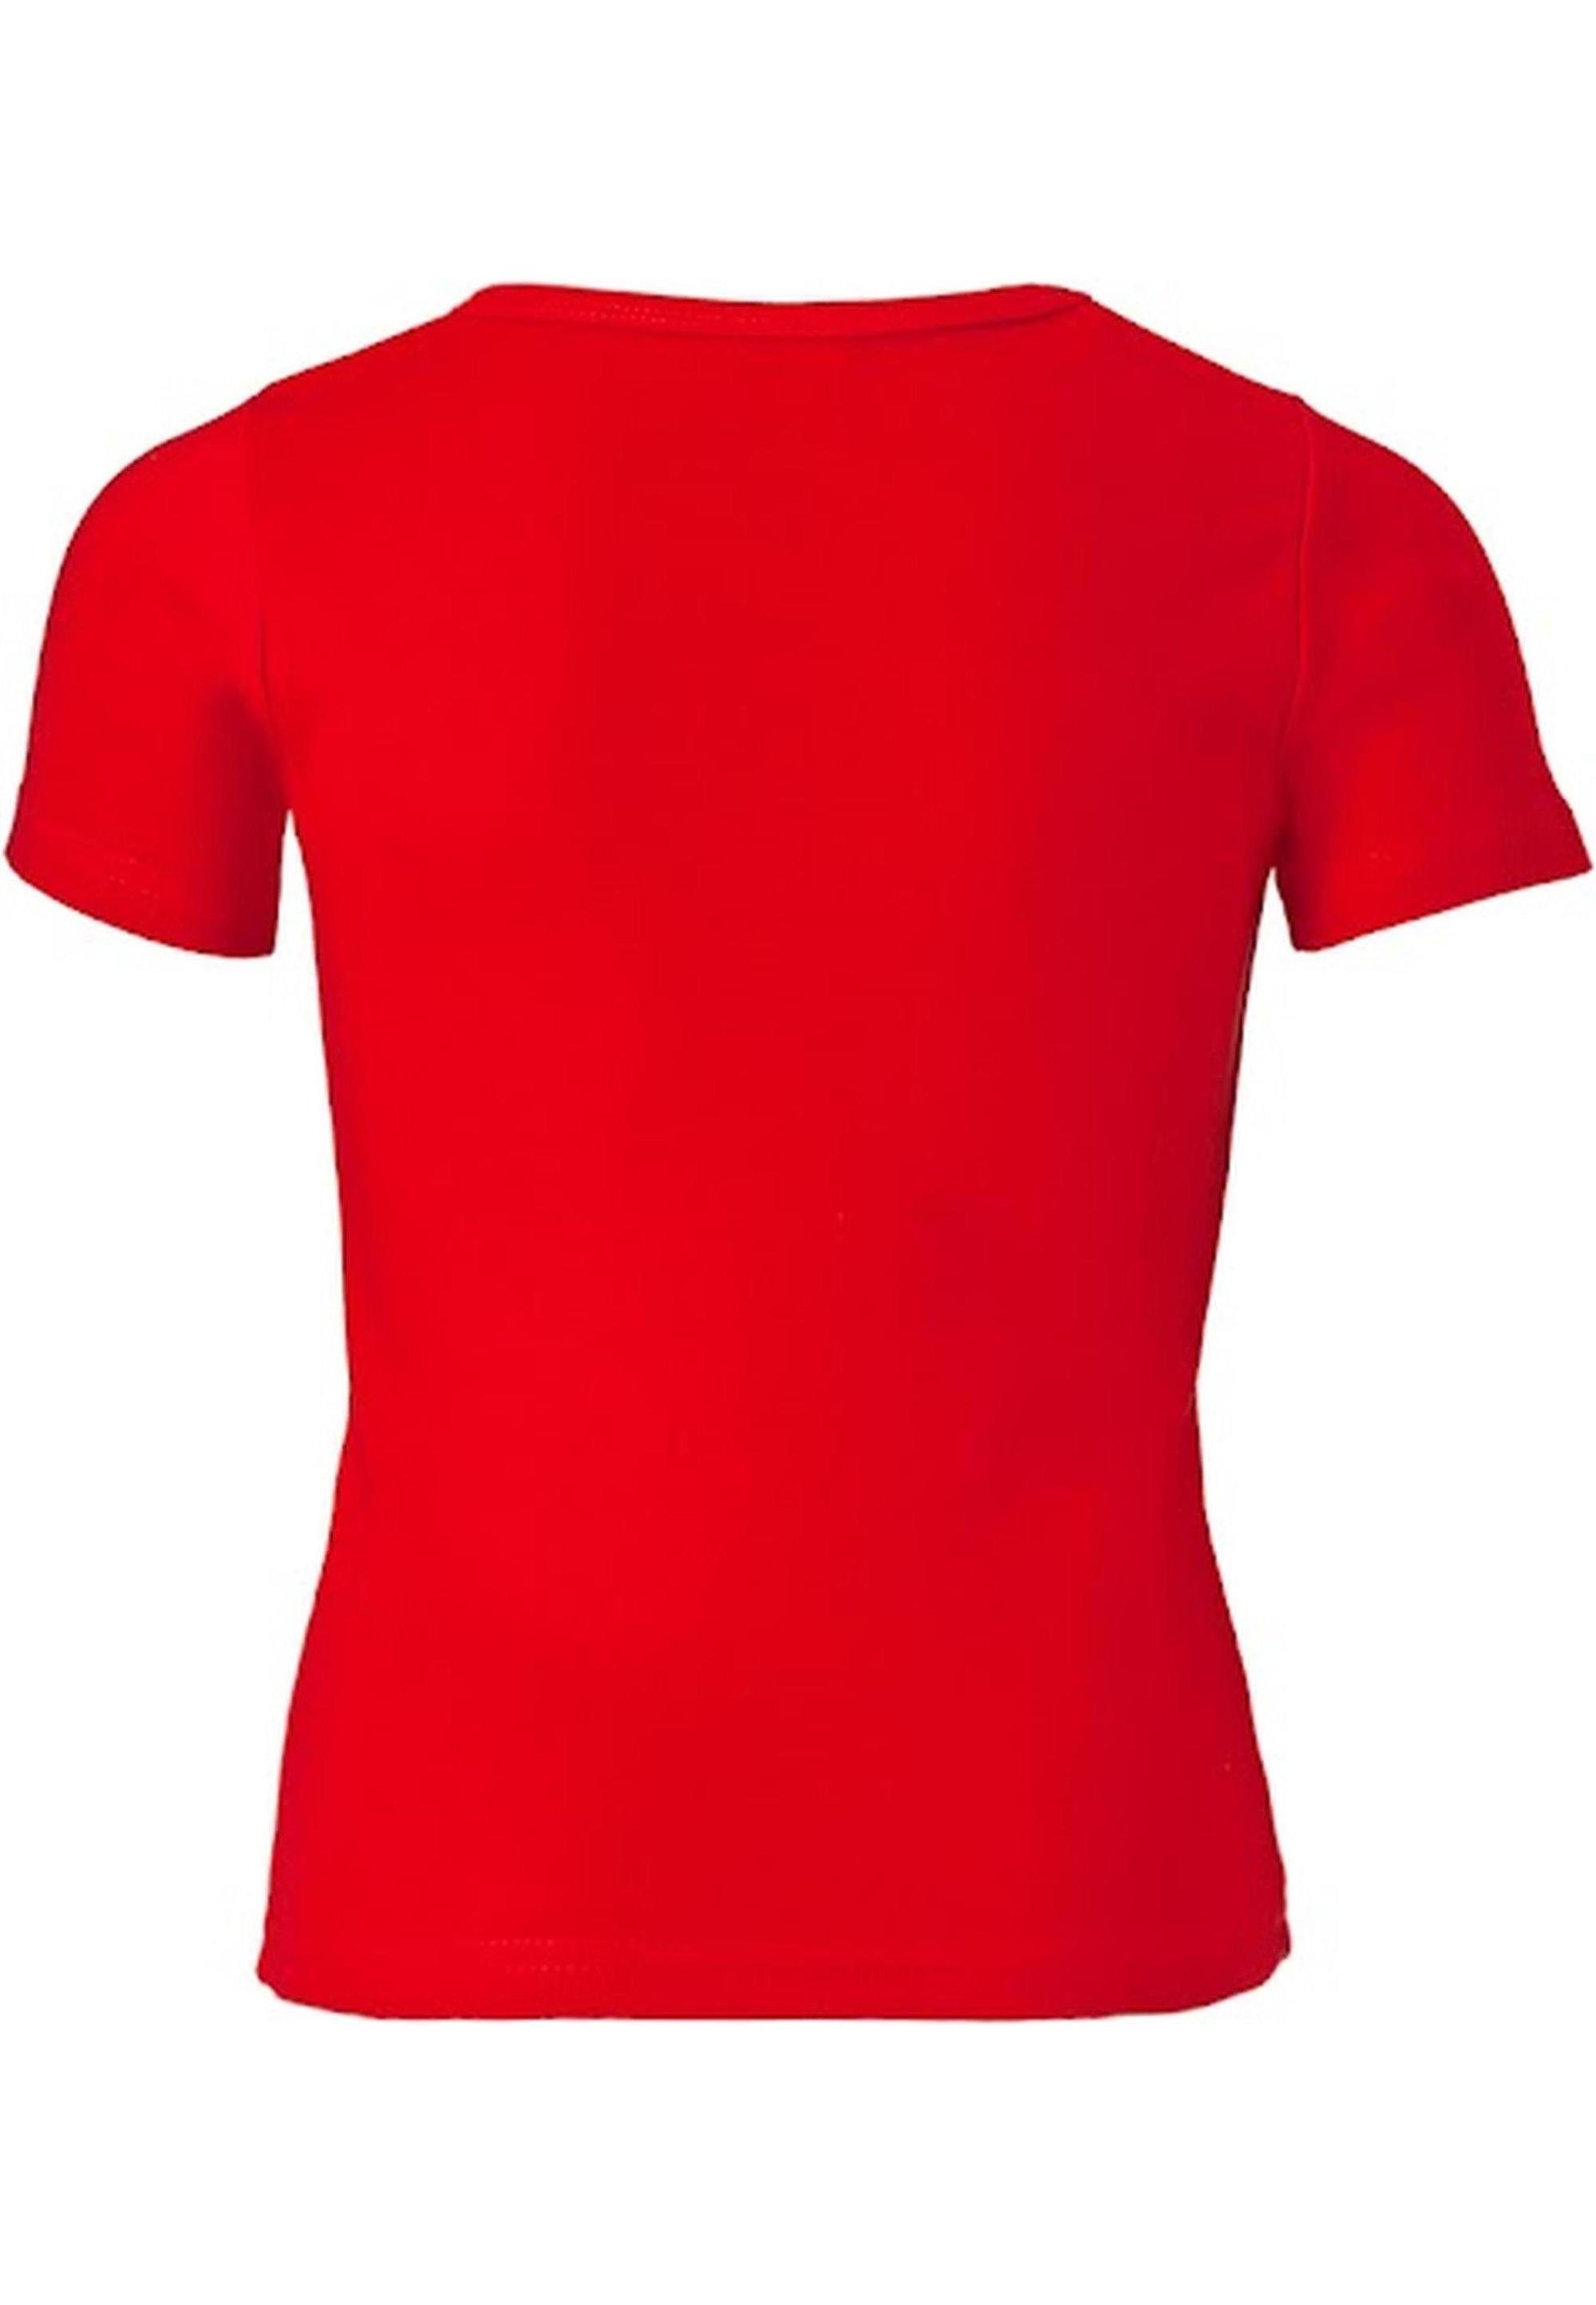 lizenziertem Die mit Originaldesign LOGOSHIRT Maus rot T-Shirt